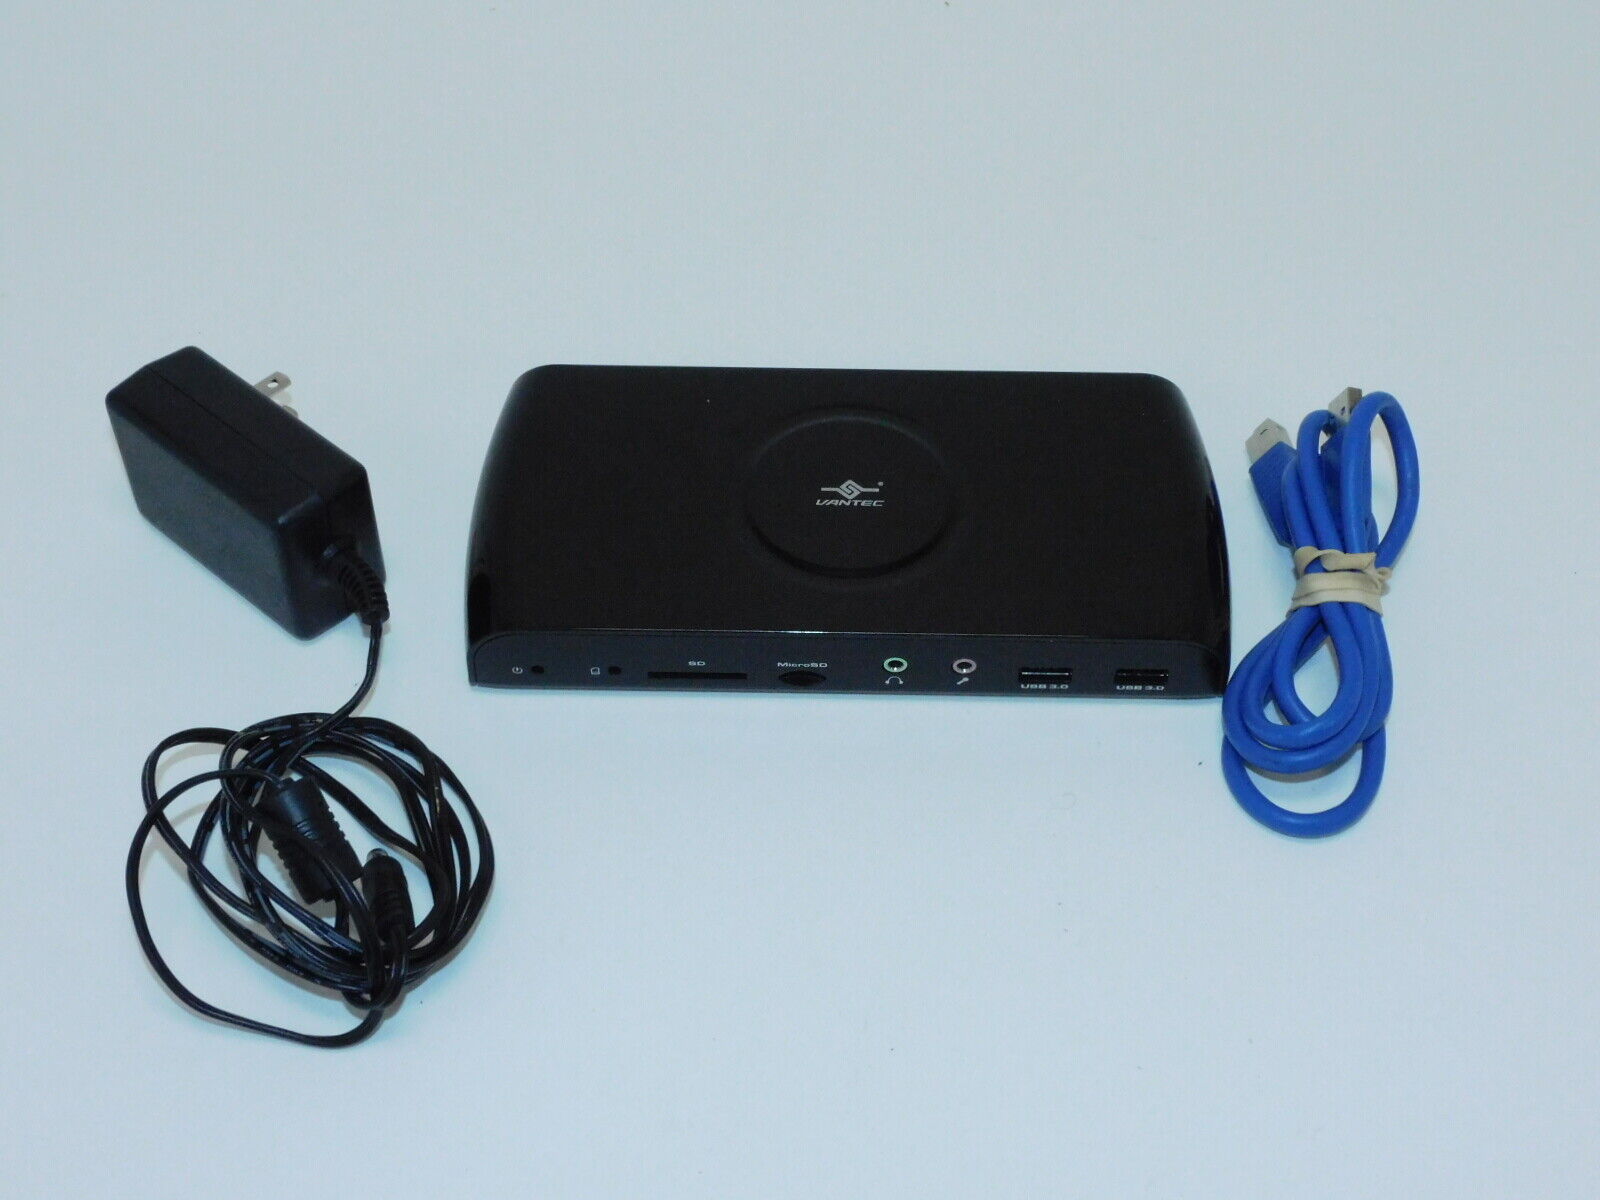 Vantec DSH-300U3 USB 3.0 Universal Dual Video Docking Station with SD Reader.